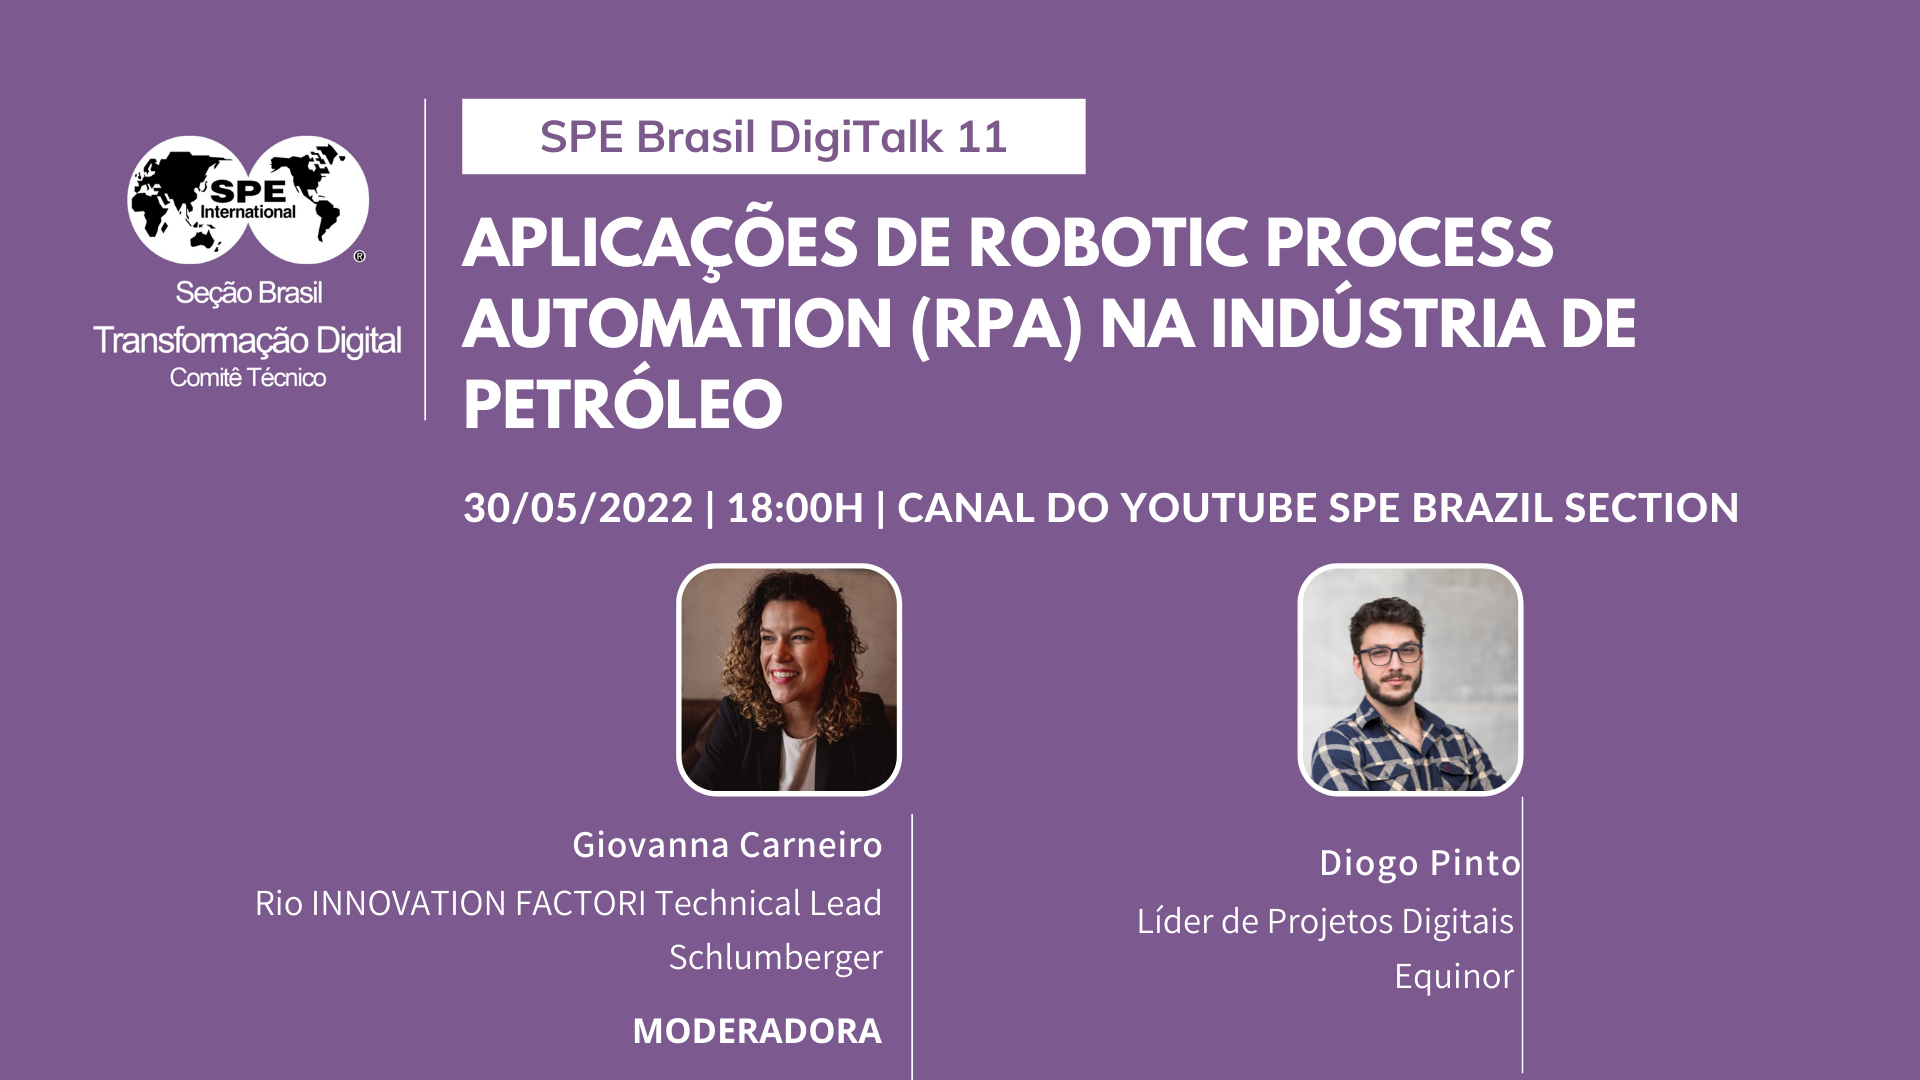 SPE Brasil DigiTalk 11: “Aplicações de Robotic Process Automation (RPA) na Indústria de Petróleo”.